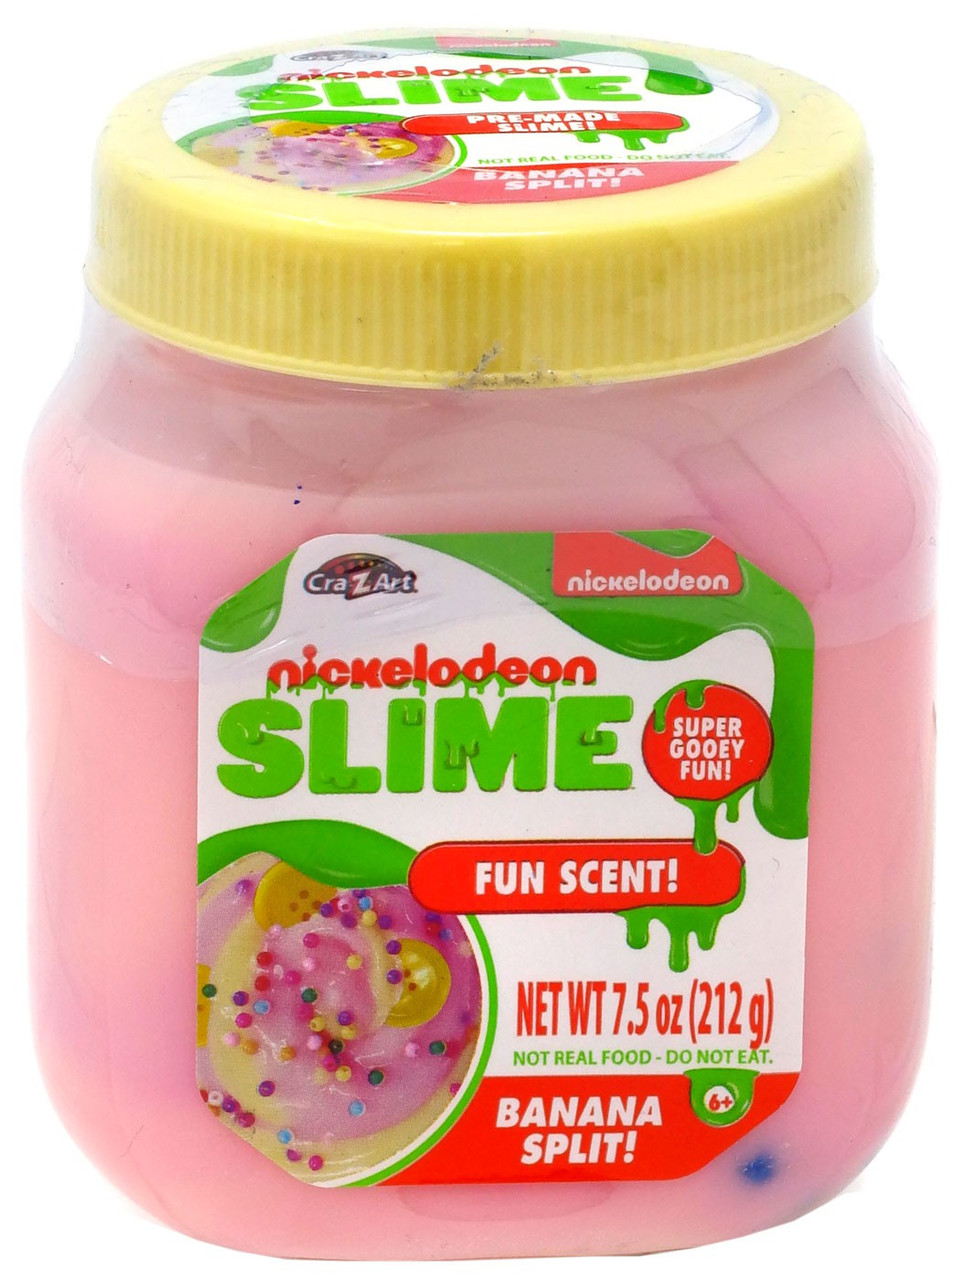 Nickelodeon Slime Banana Split Slime